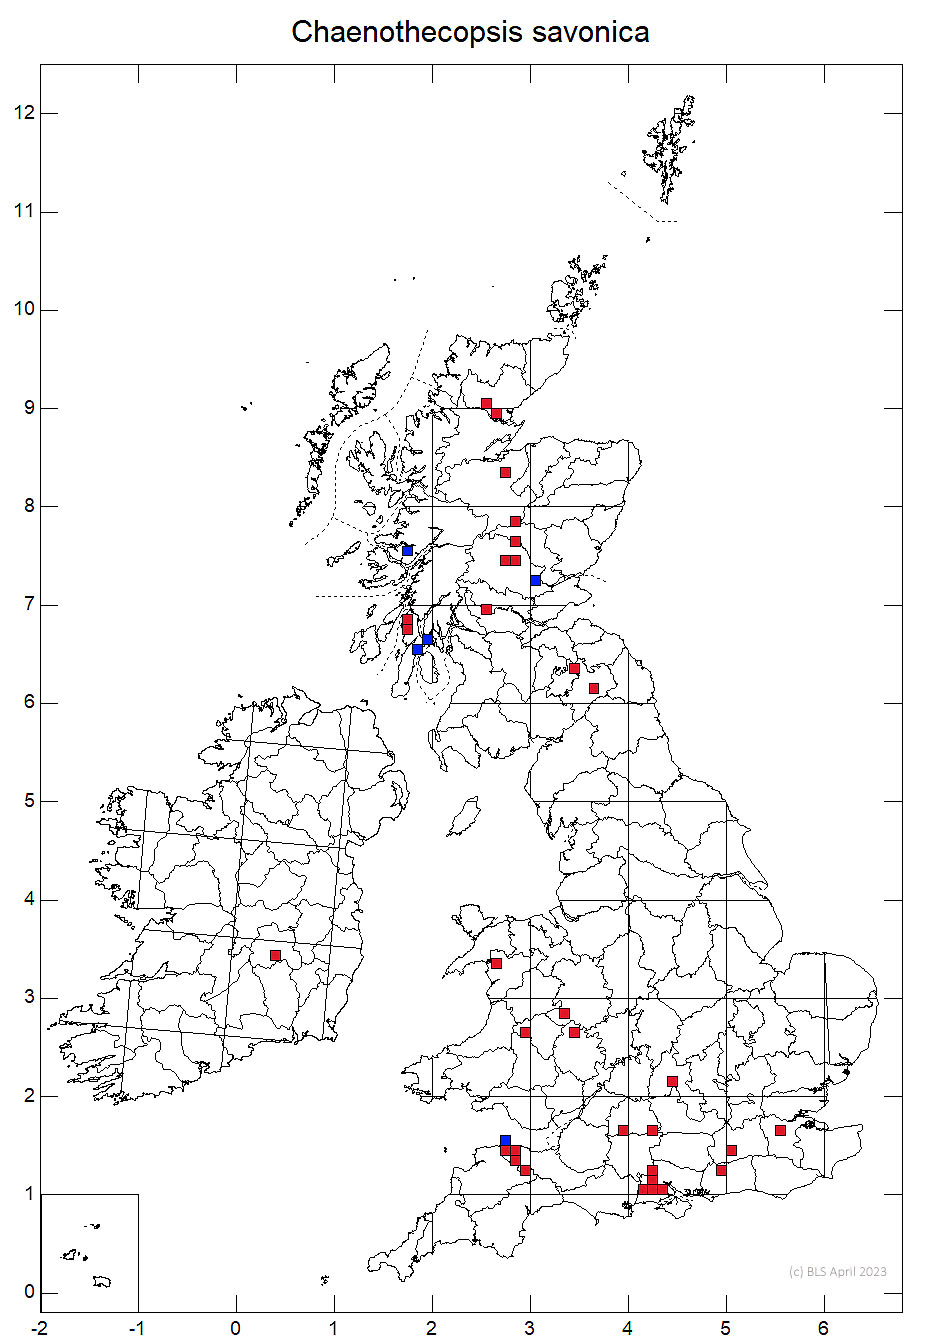 Chaenothecopsis savonica 10km sq distribution map